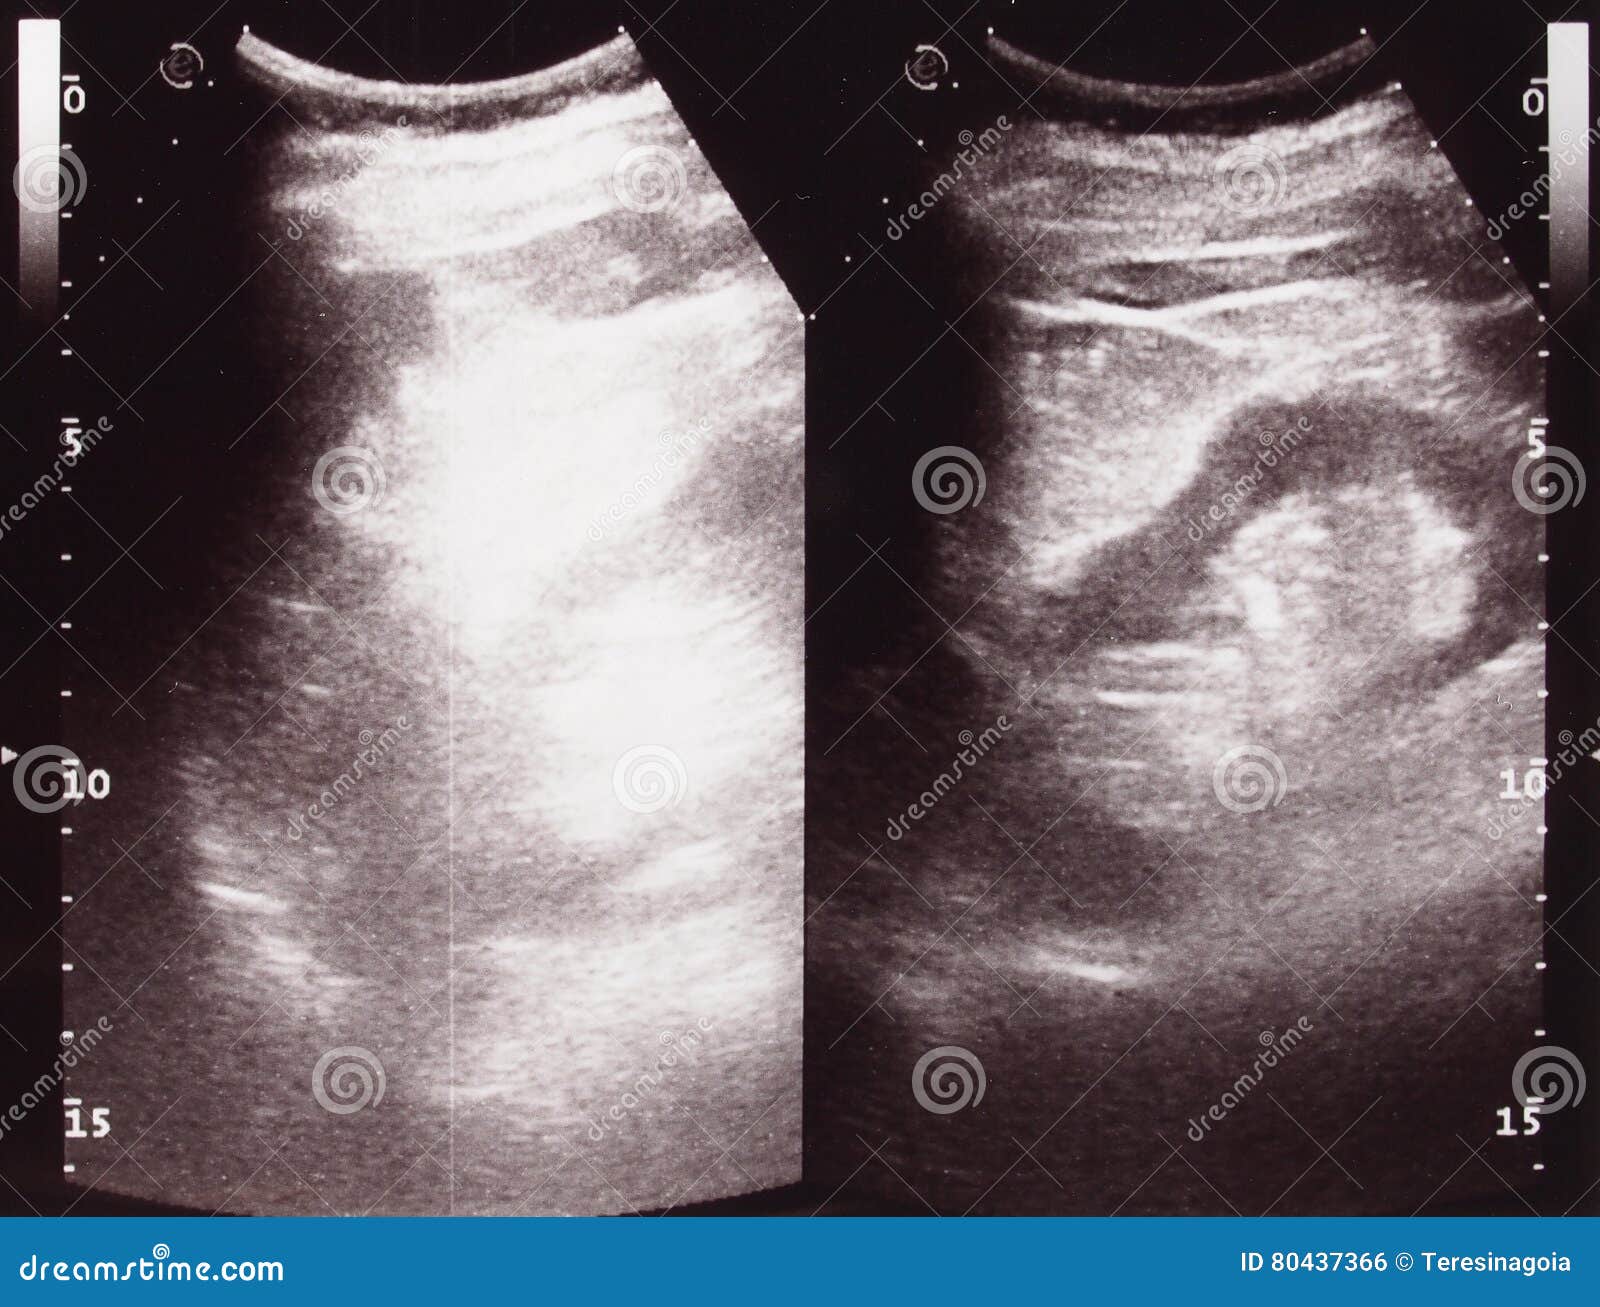 diagnostic sonography of abdomen